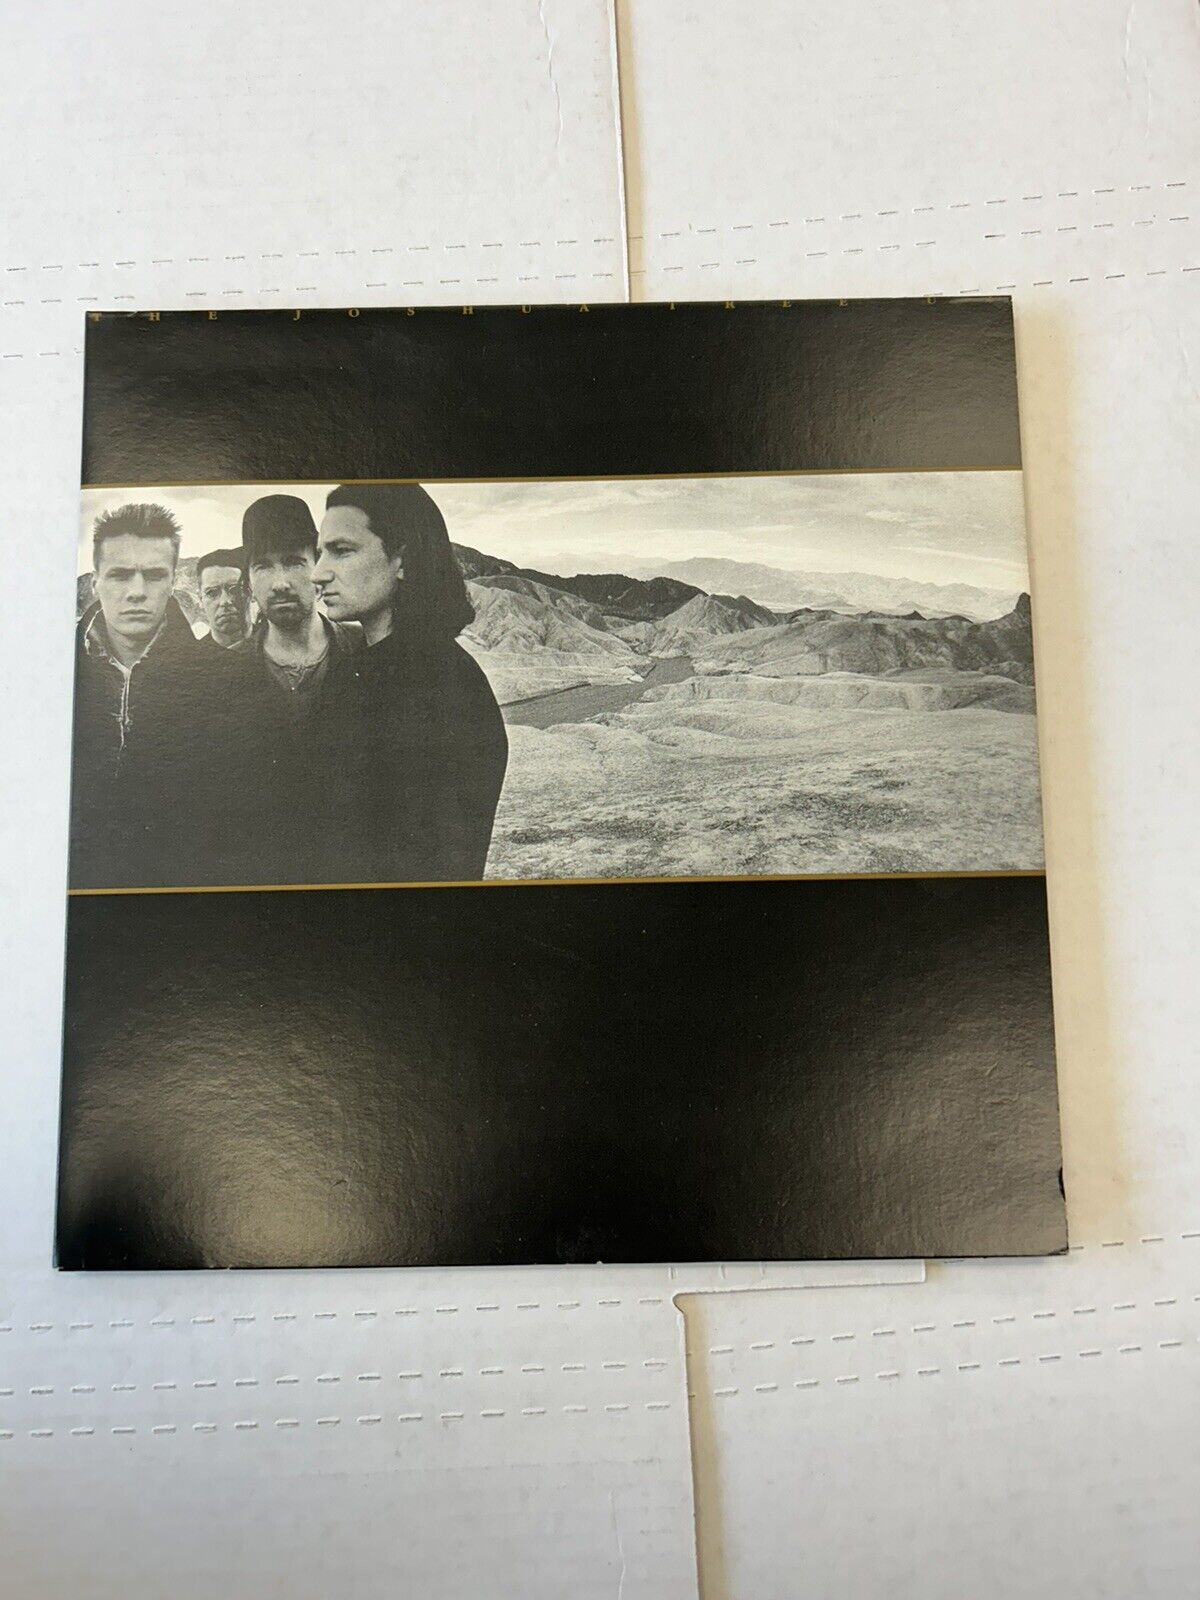 U2 THE JOSHUA TREE VINYL LP 1987 WITH LYRIC SHEET NEAR MINT 